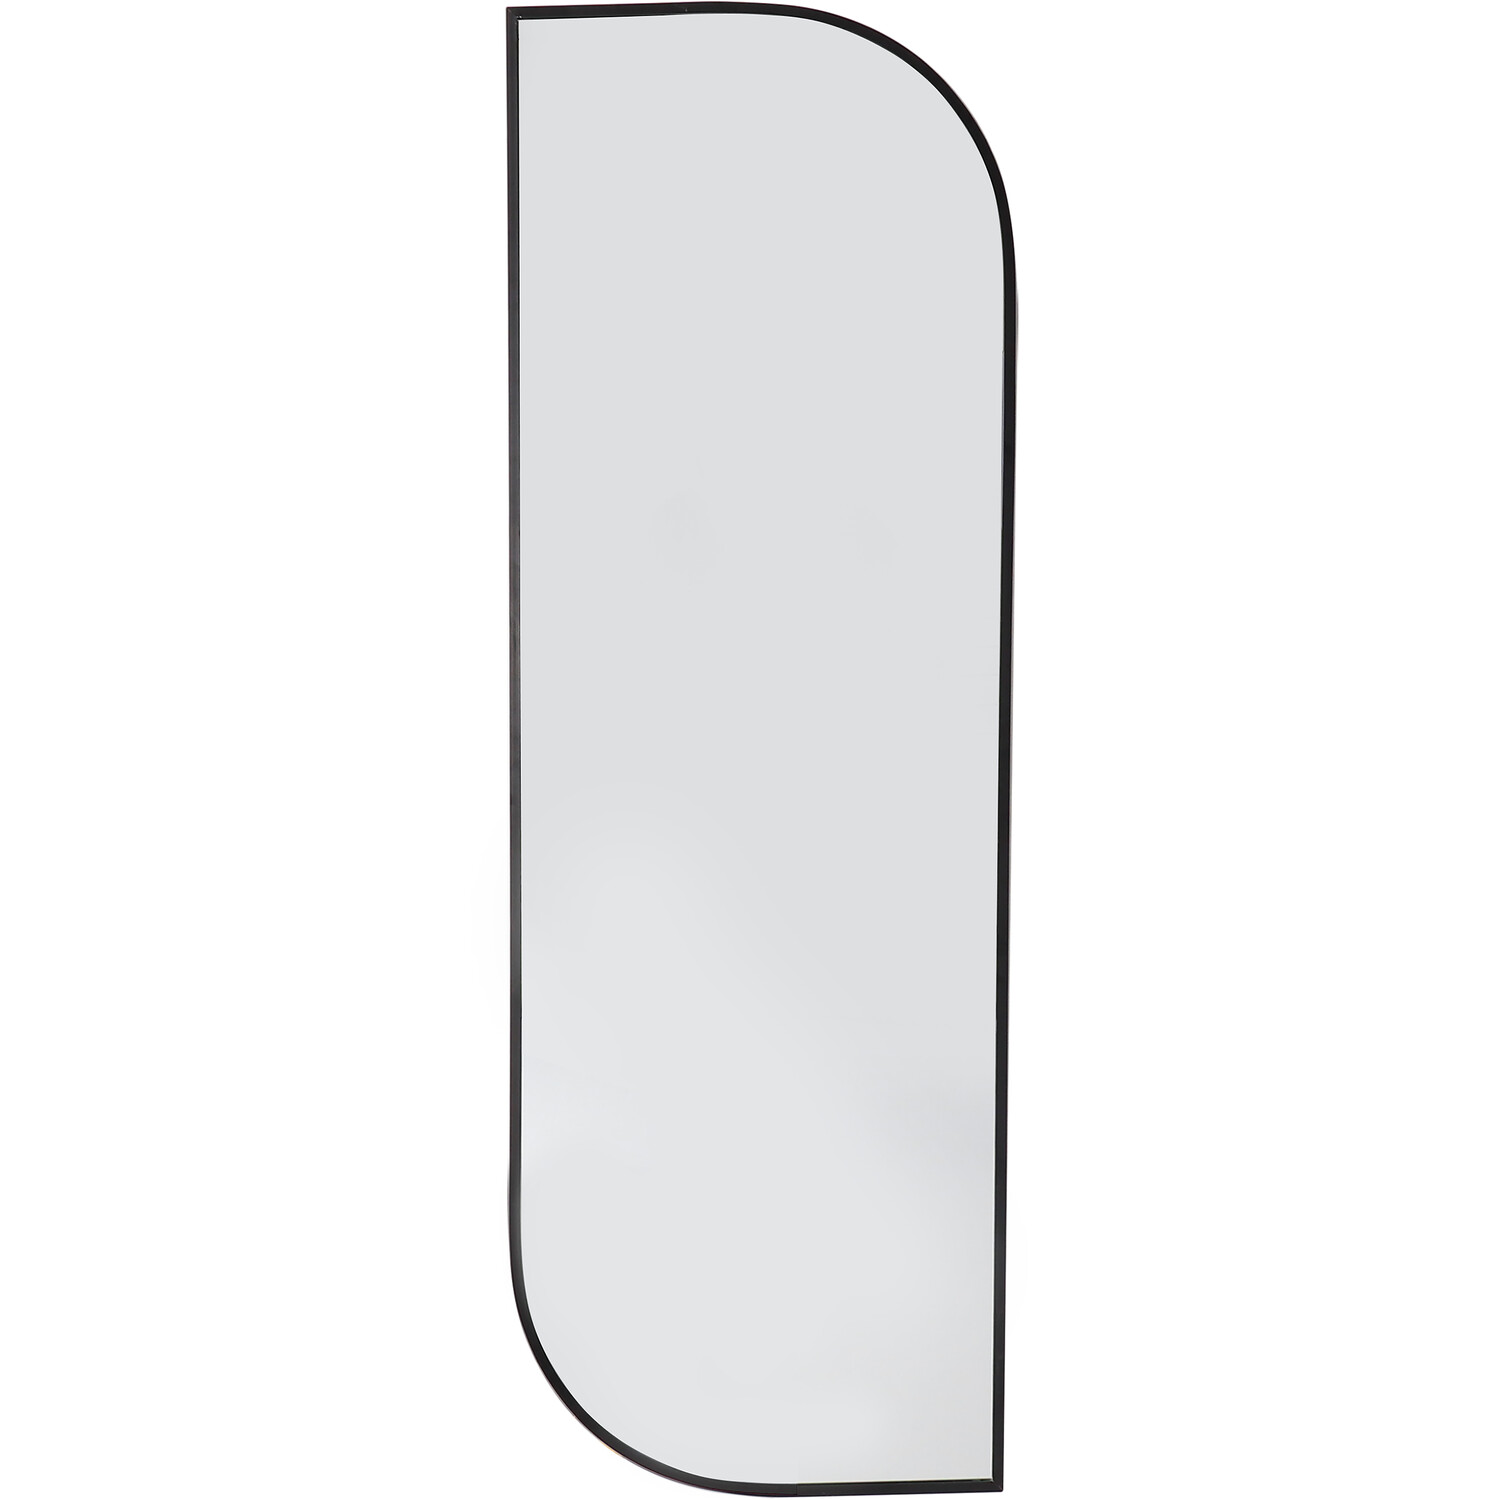 Thea Asymmetric Black Mirror Image 1